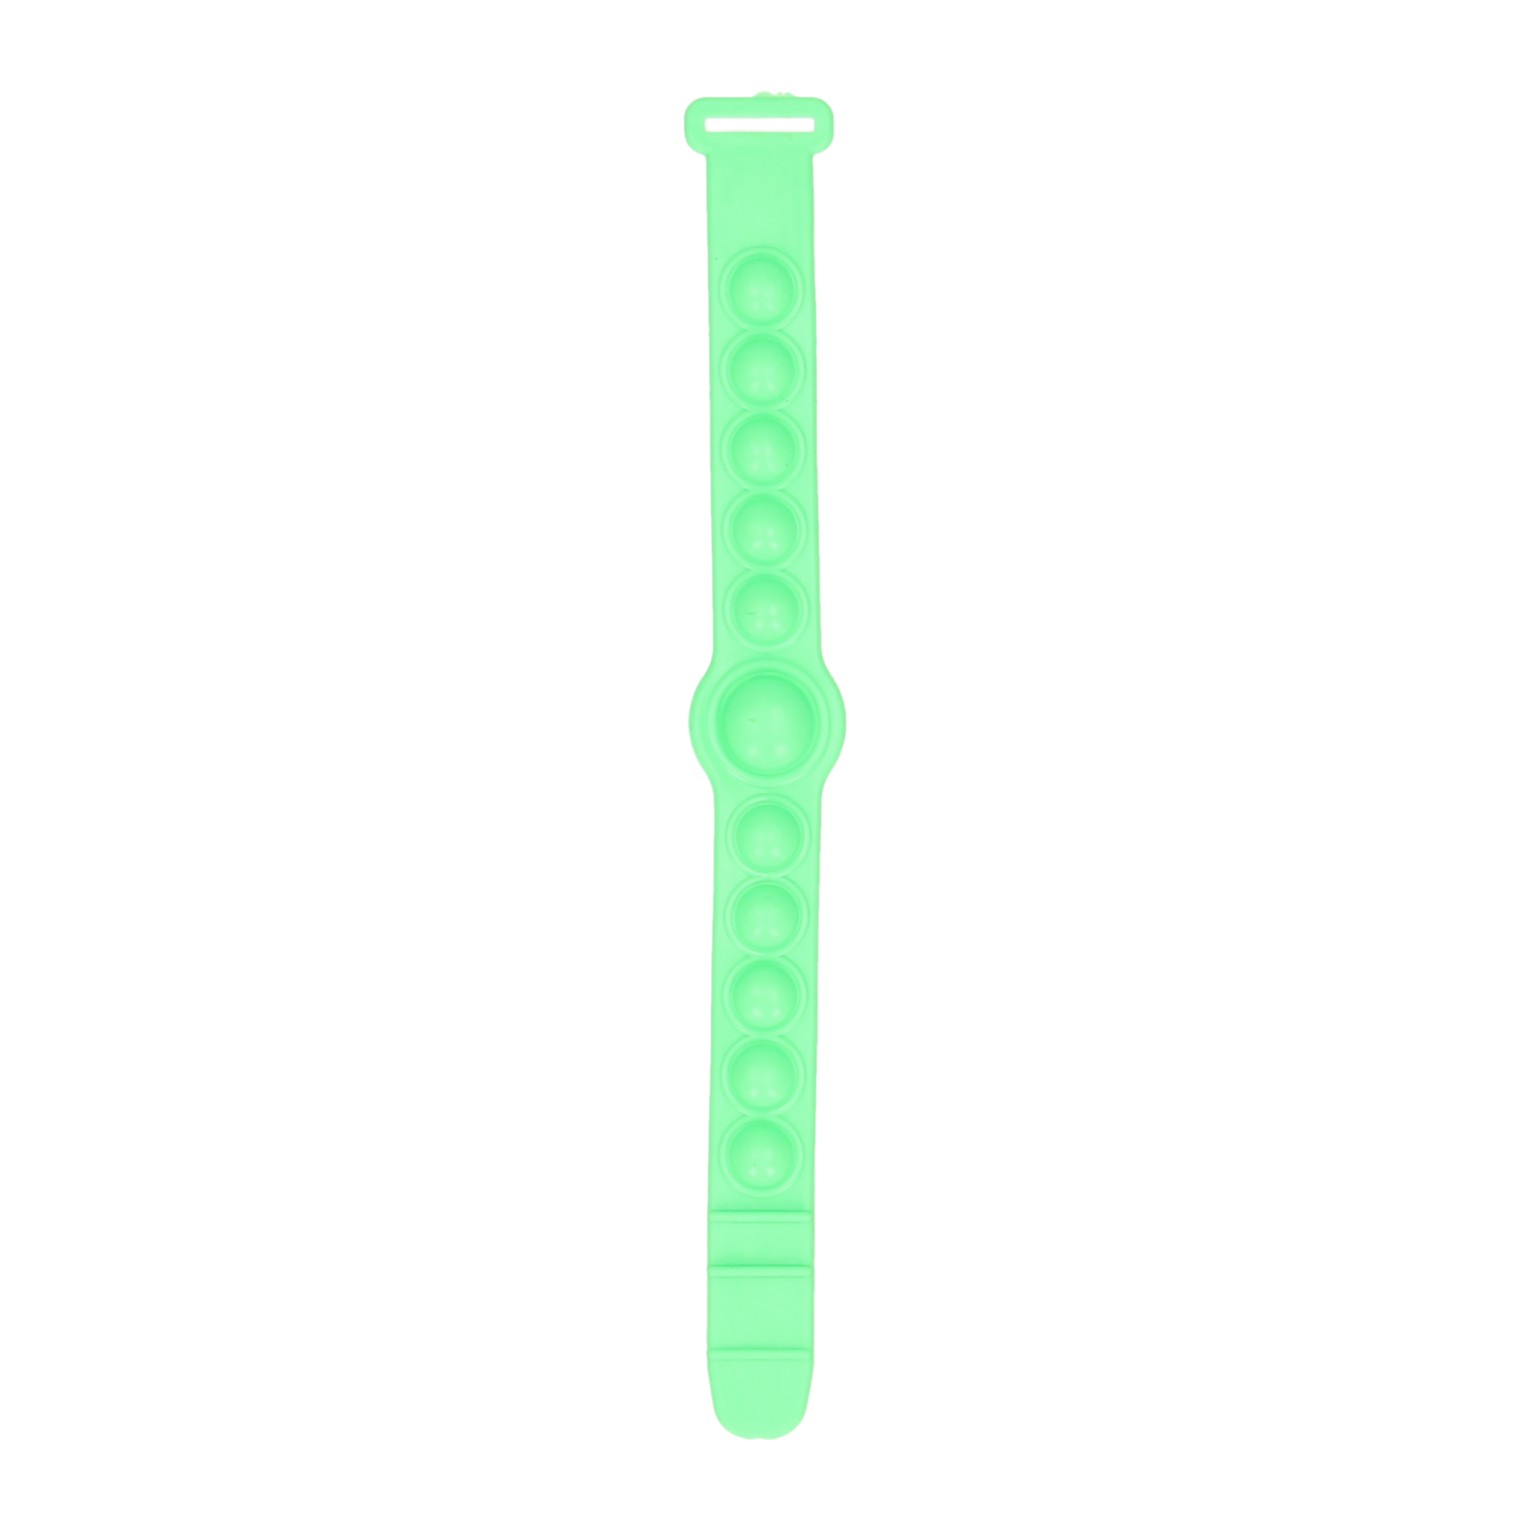 Farbe des Pop-It-Armbands